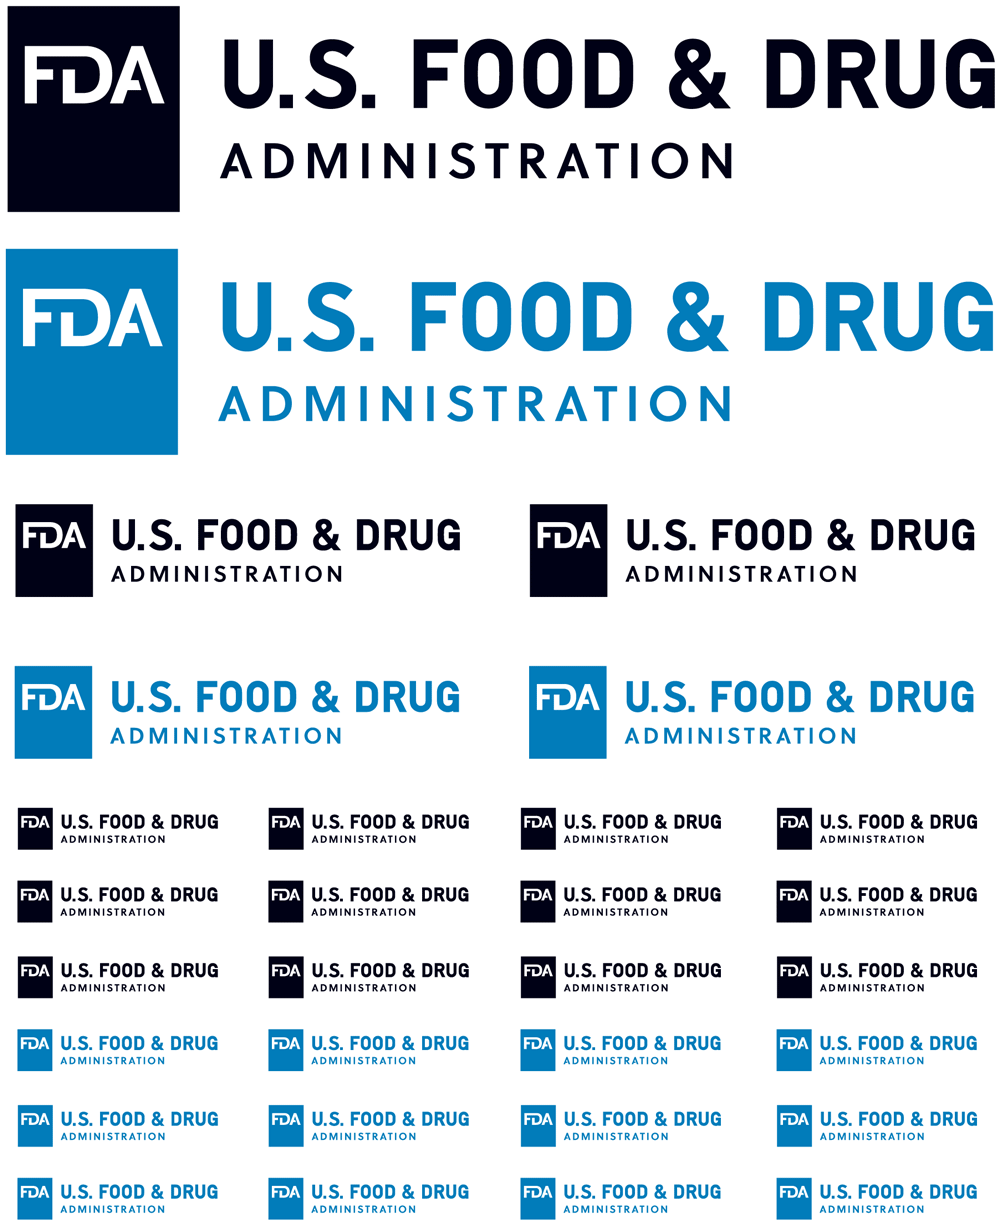 FDA Logo - Brand New: New Logo for FDA